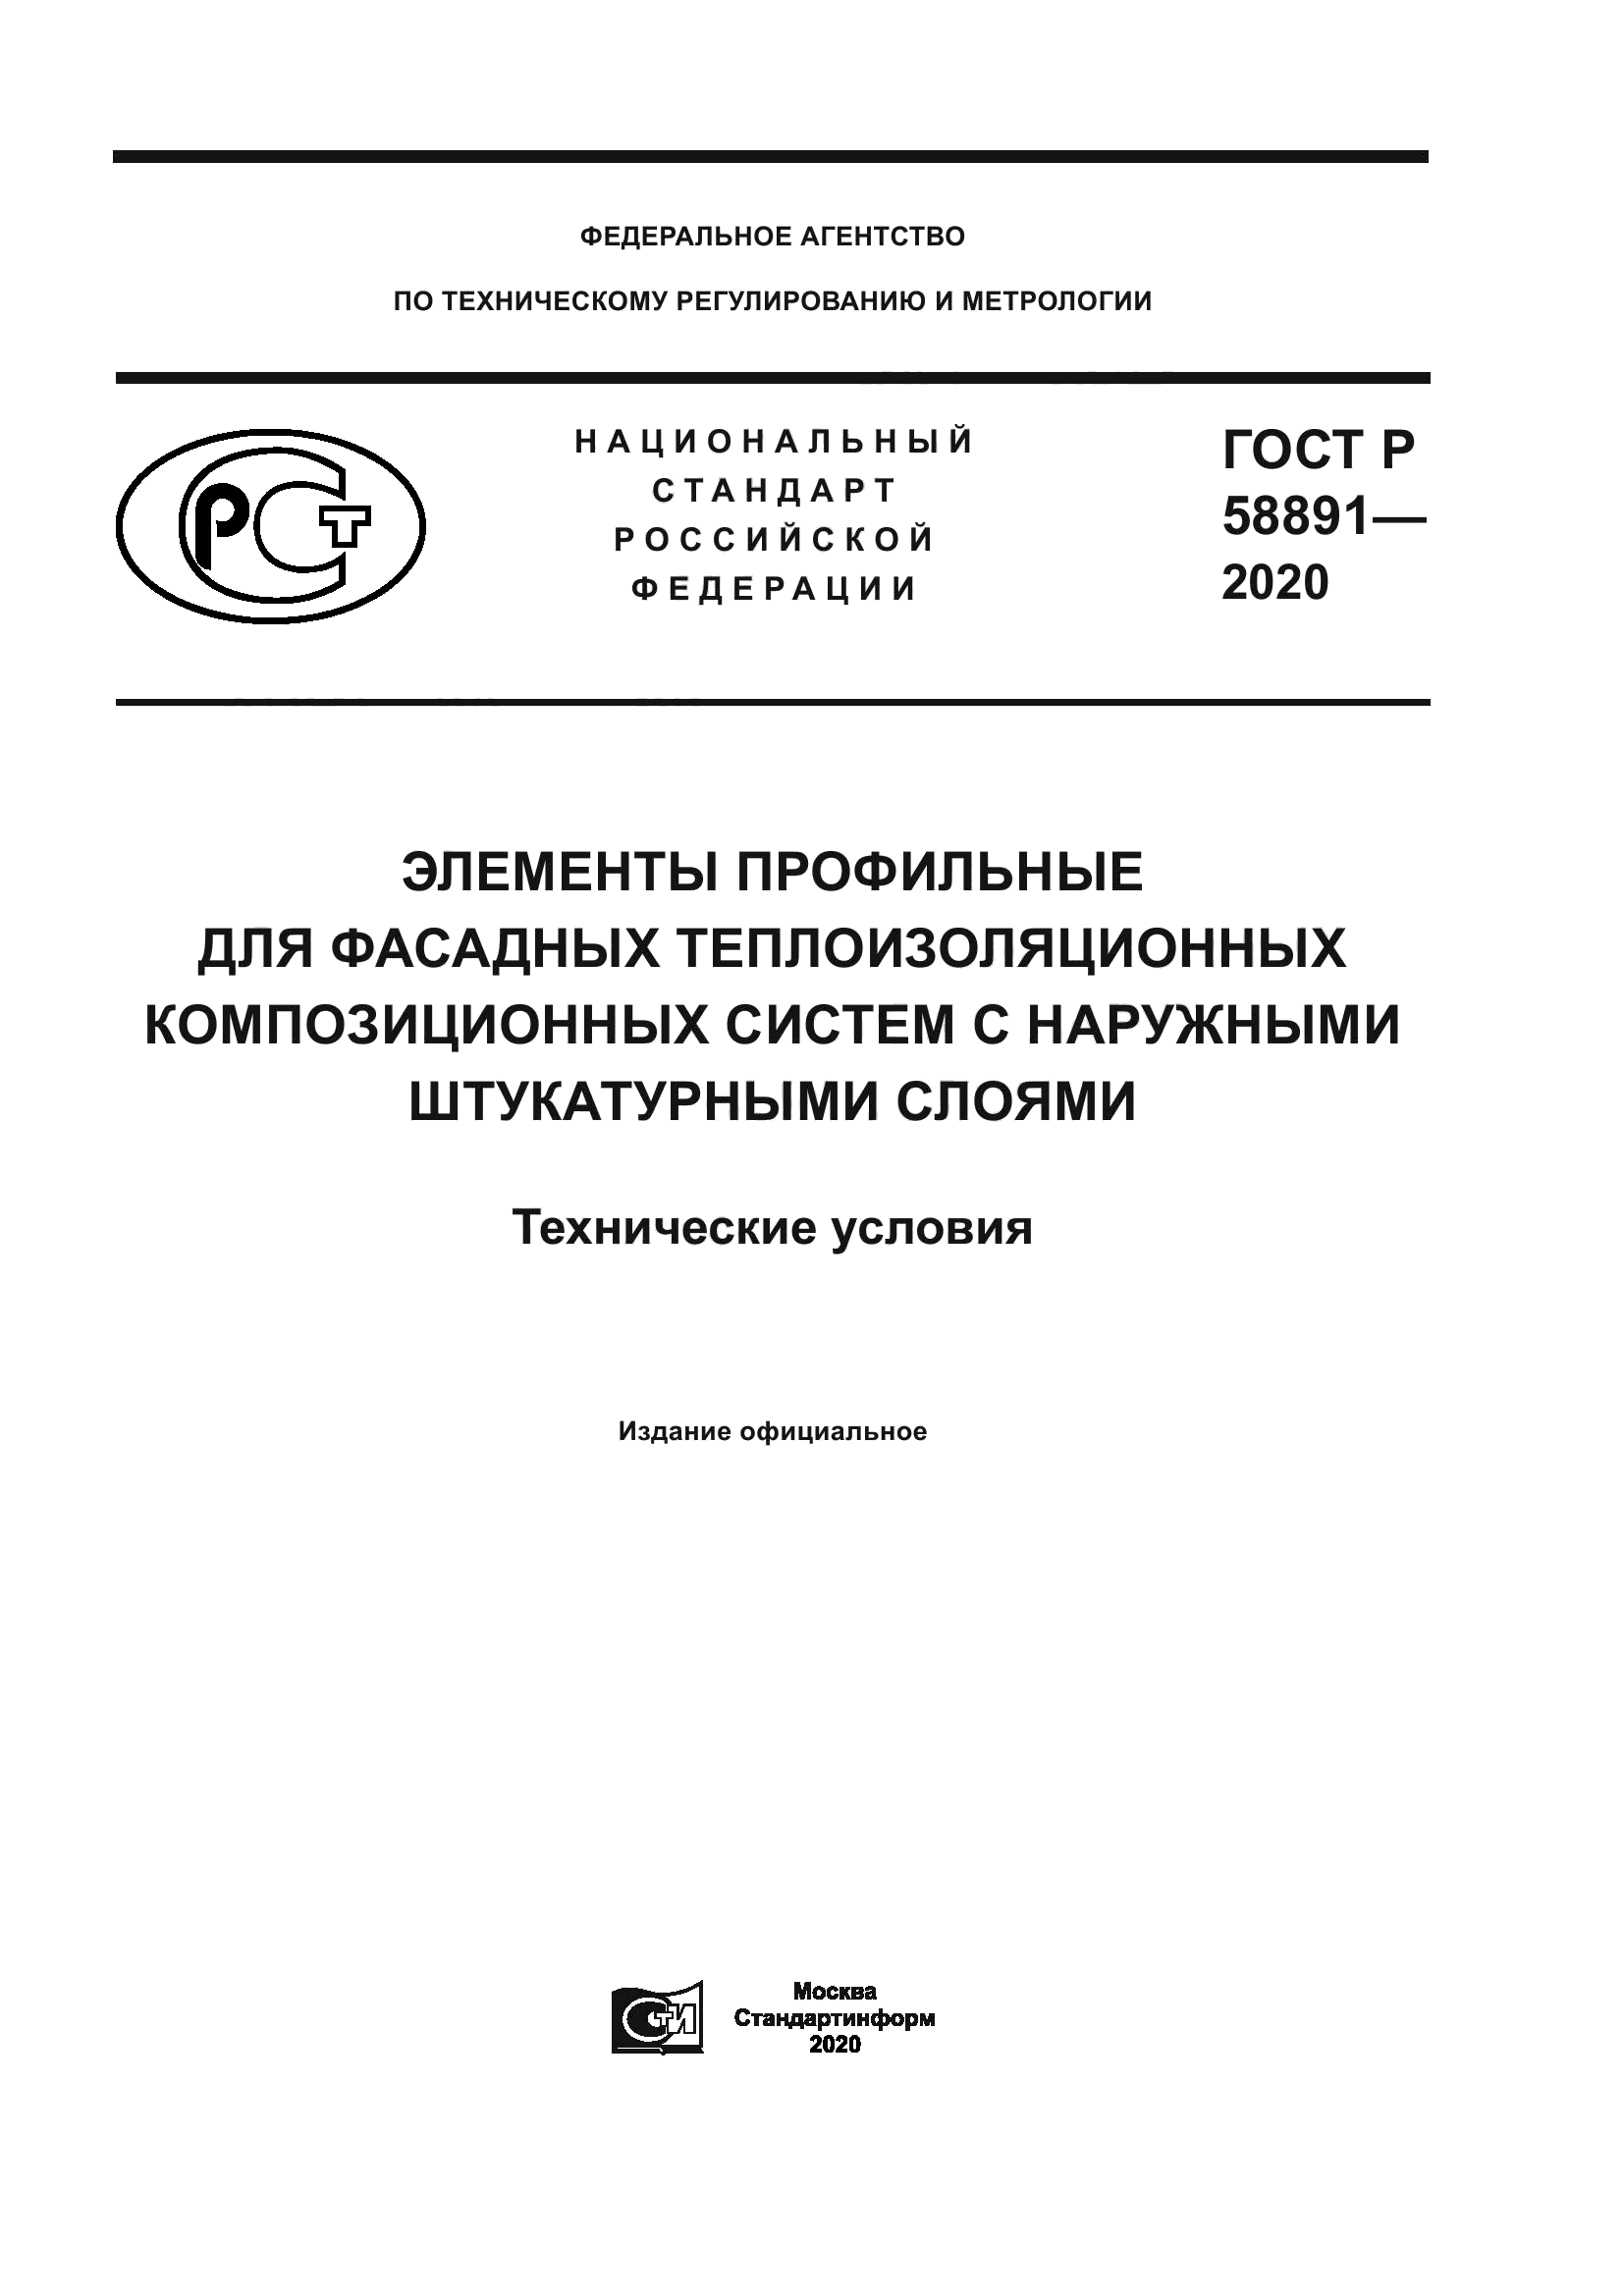 ГОСТ Р 58891-2020